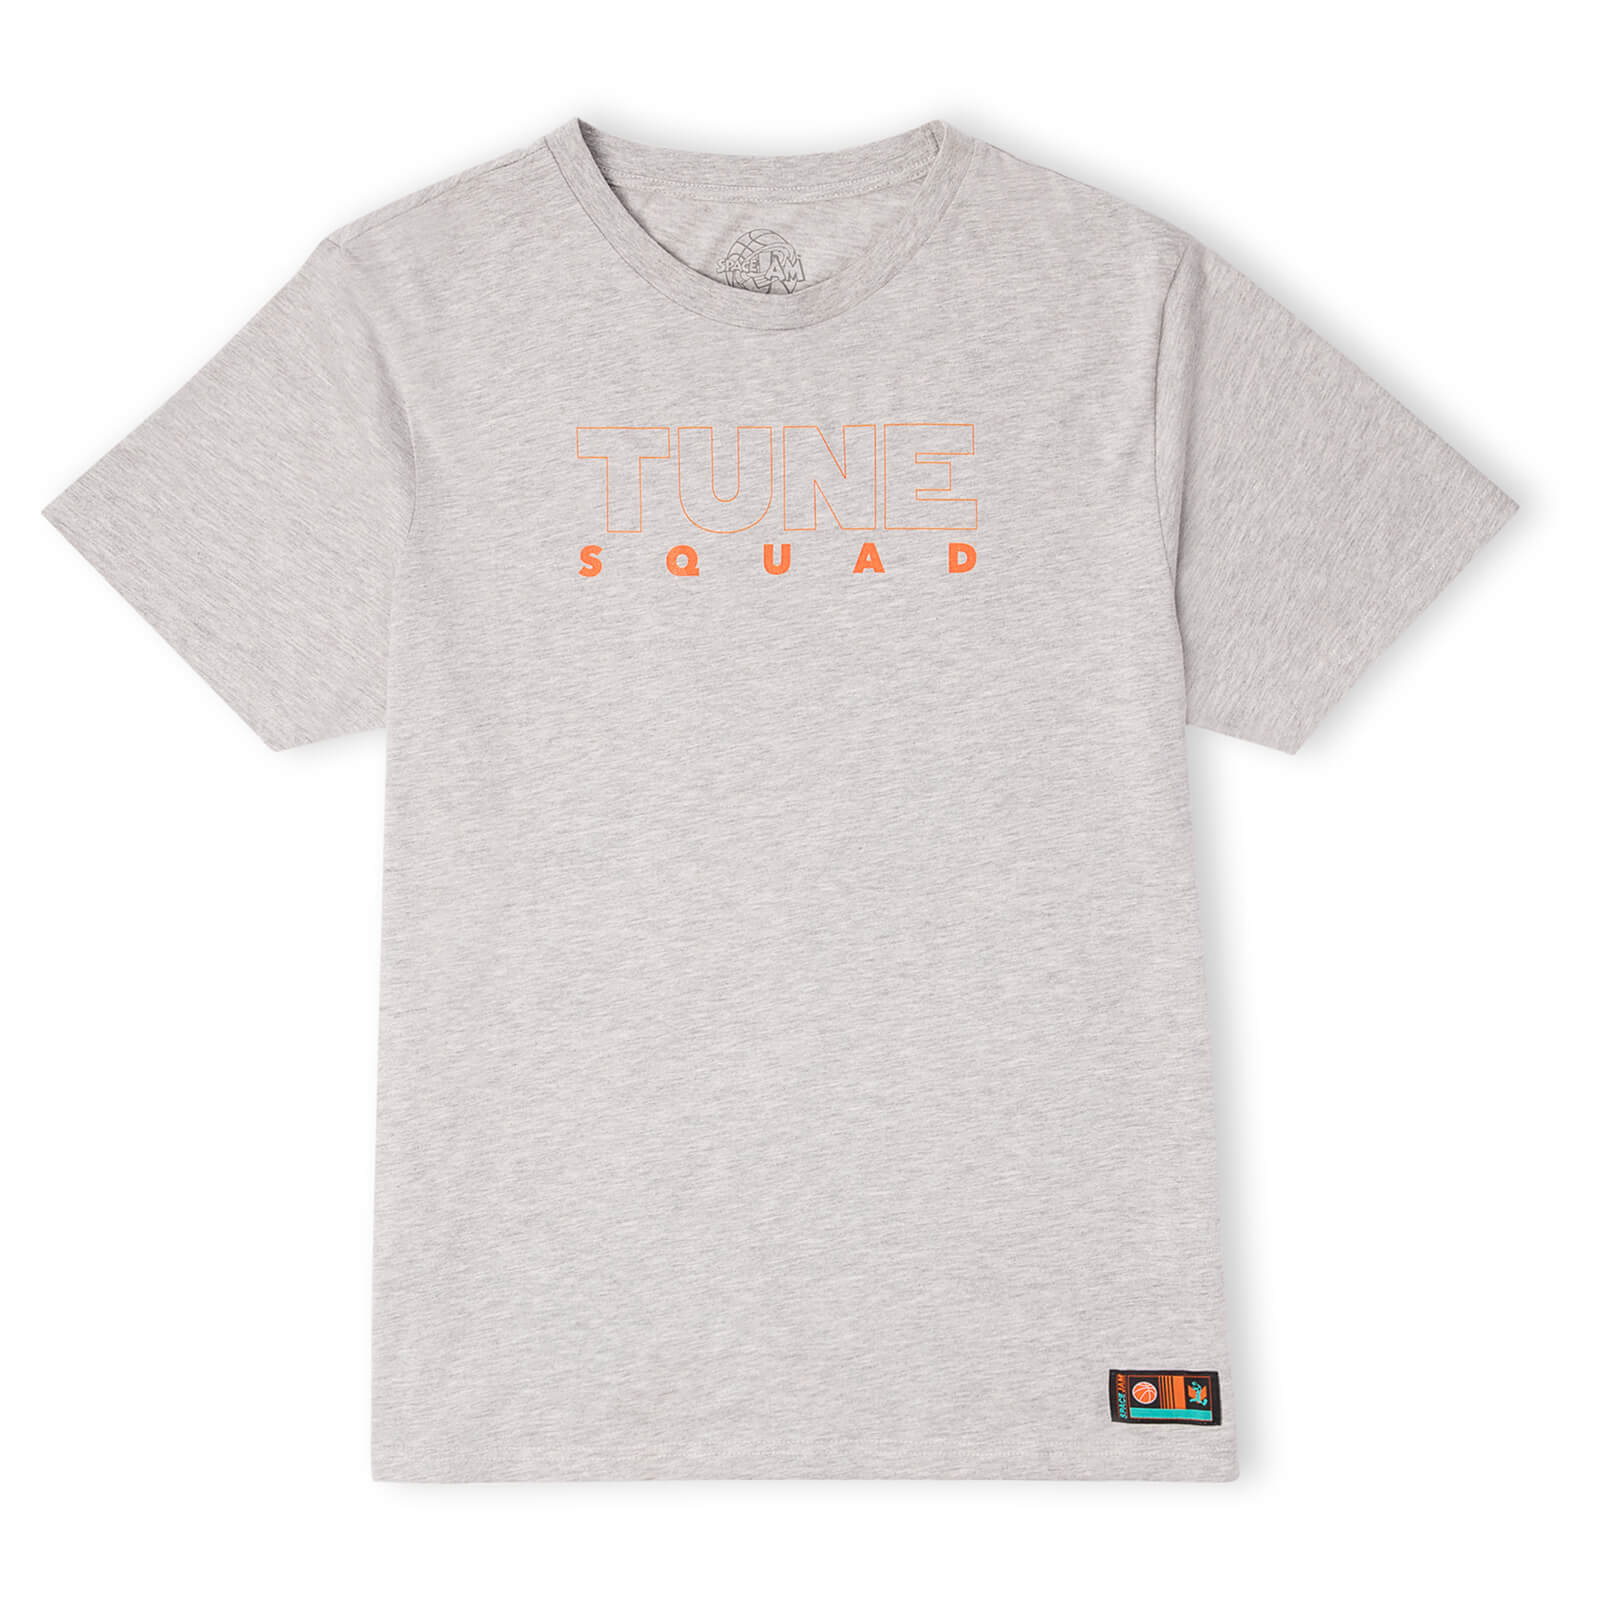 Space Jam Tune Squad Space Jam Unisex T-Shirt - Grey - S - Grey